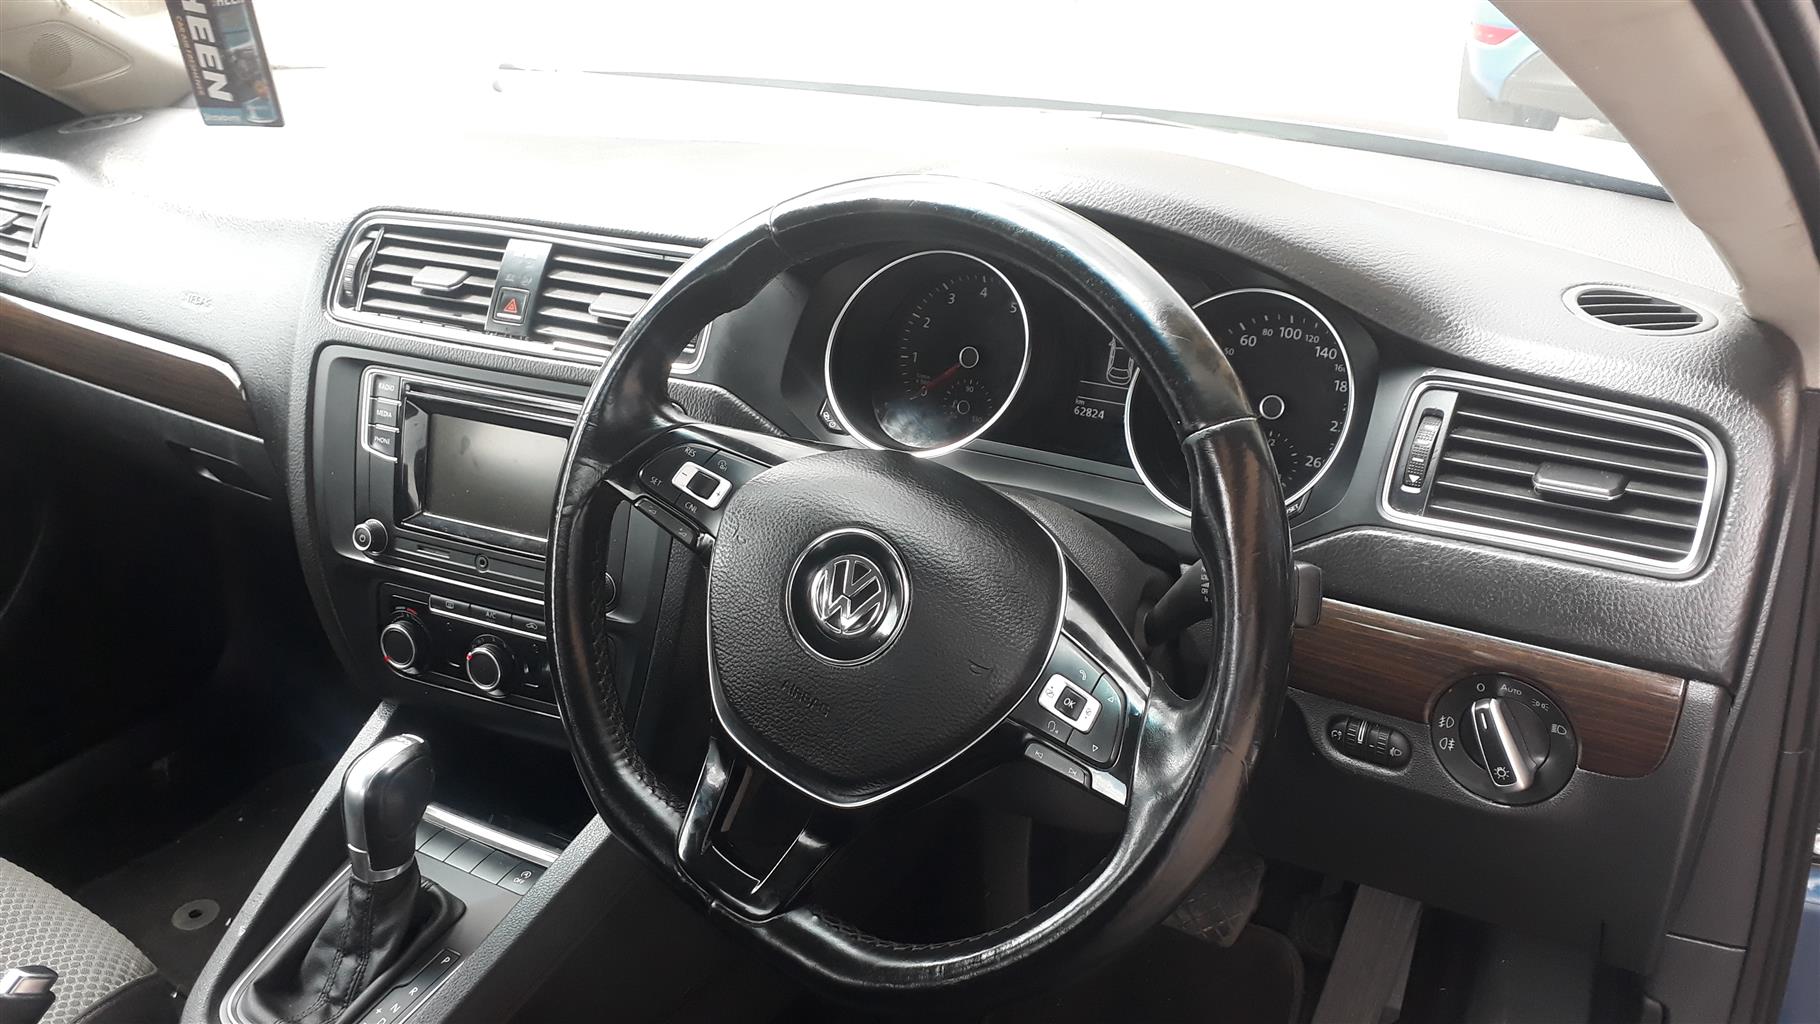 2016 VW Jetta 6 1.4 TSi Bluemotion Automatic 